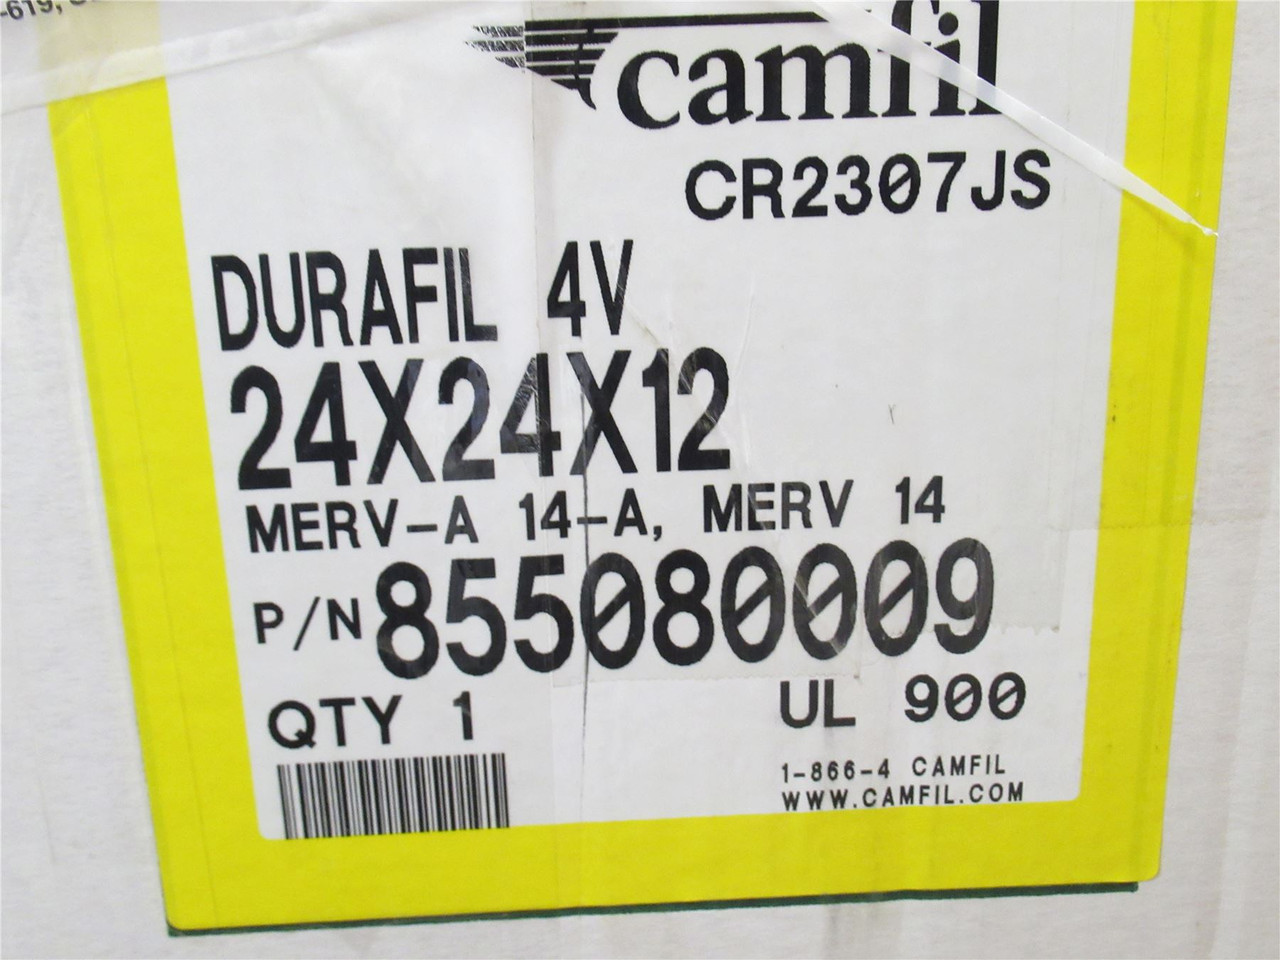 Camfil 855080009; Panel Filter 24" x 24" x 14"; MERV 14